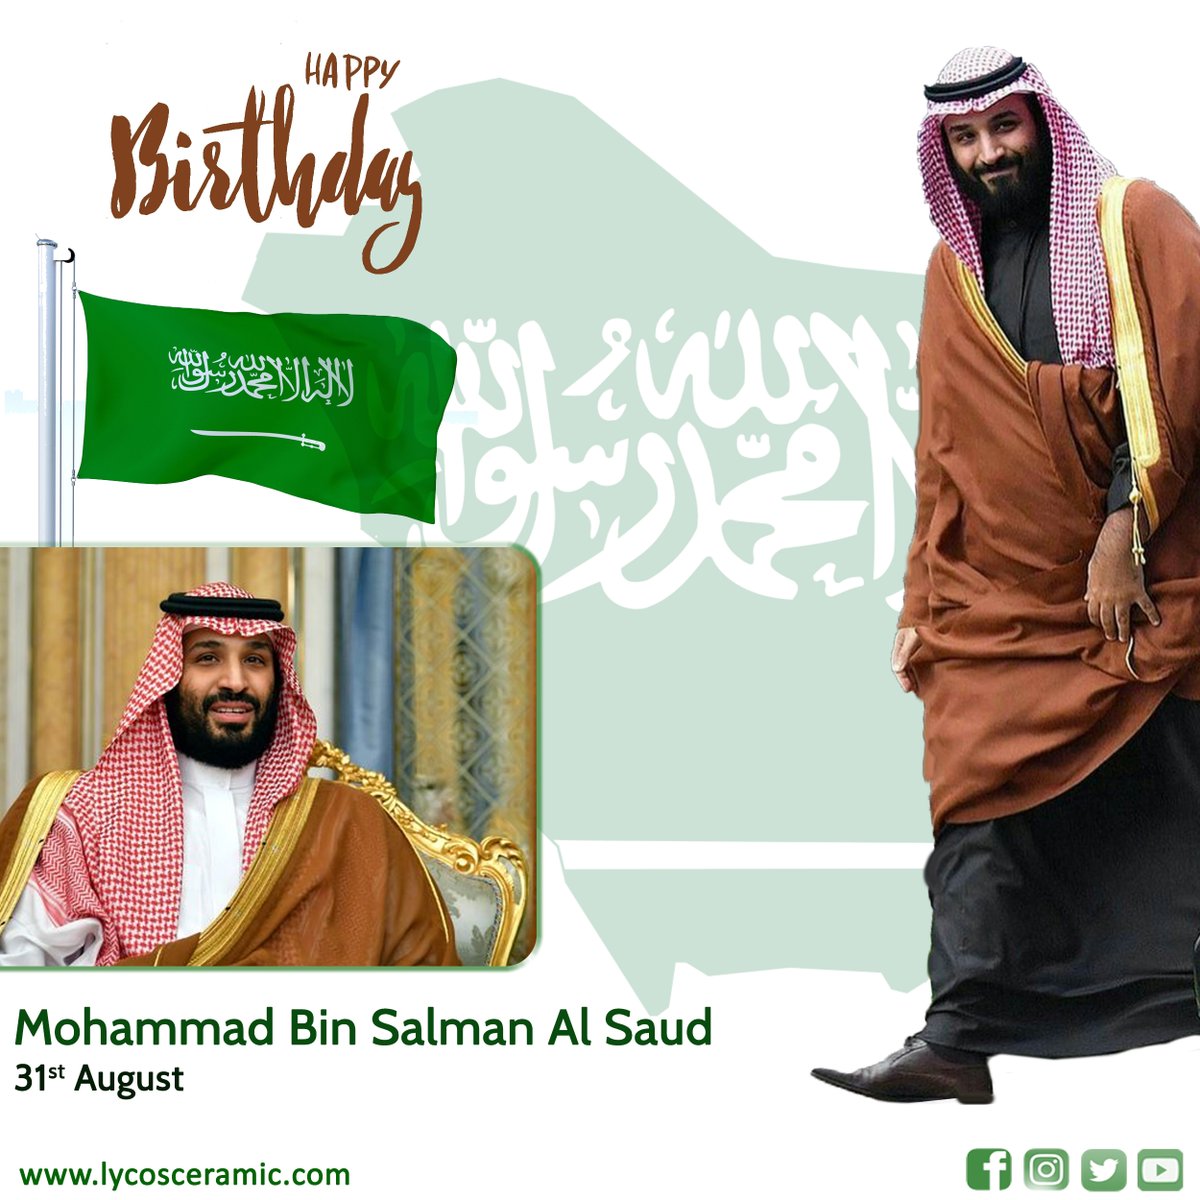 Happy Birthday to Crown Prince of Saudi Arabia Mr. Mohammad Bin Salman Al Saud
lycosceramic.com
.
.
#CrownPrinceofSaudiArabia
#MohammadBinSalmanAlSaud #HappyBirthdayMohammadBinSalmanAlSaud #MohammadBinSalmanAlSaudBirthday #LycosCeramic #Lycos